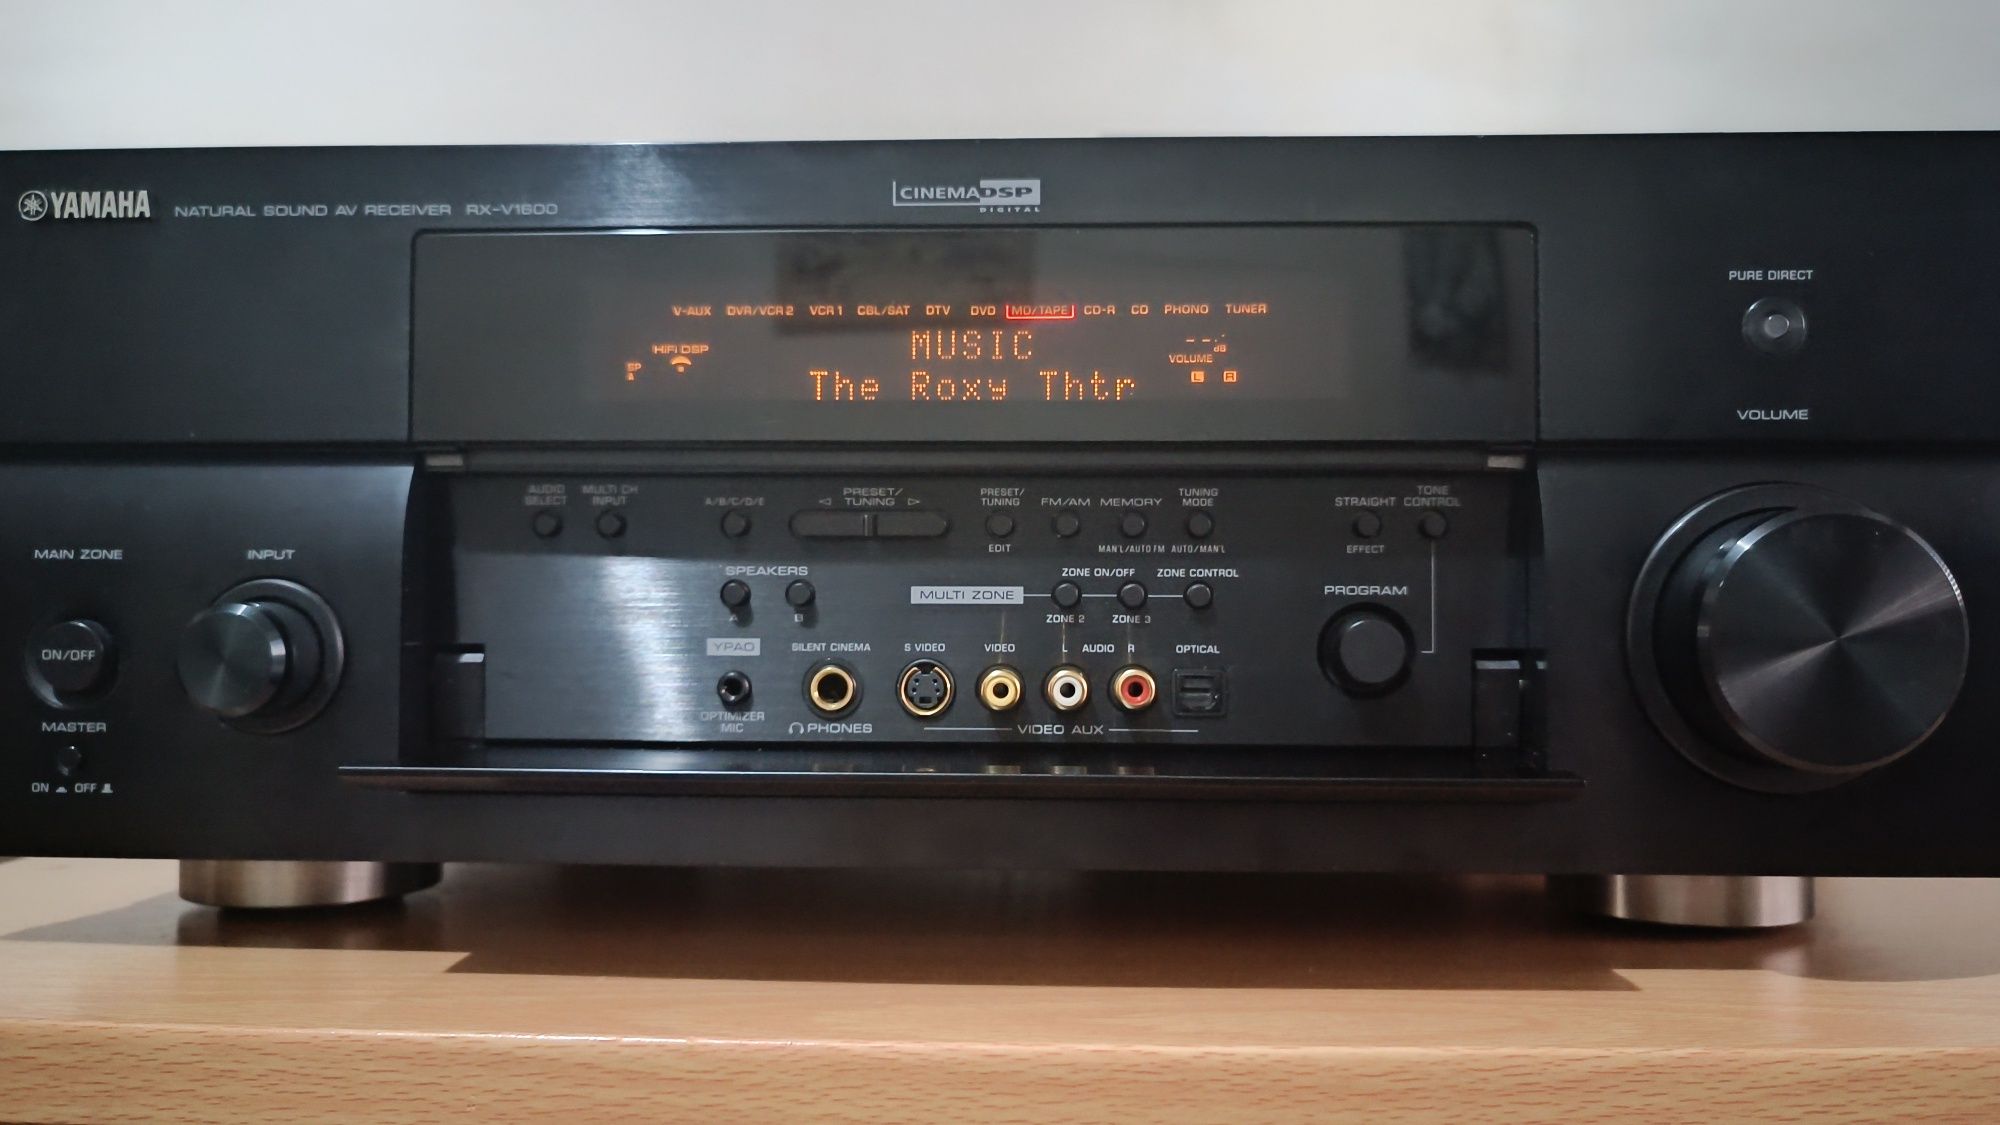 Amplificador audio video Yamaha rx-v 1600